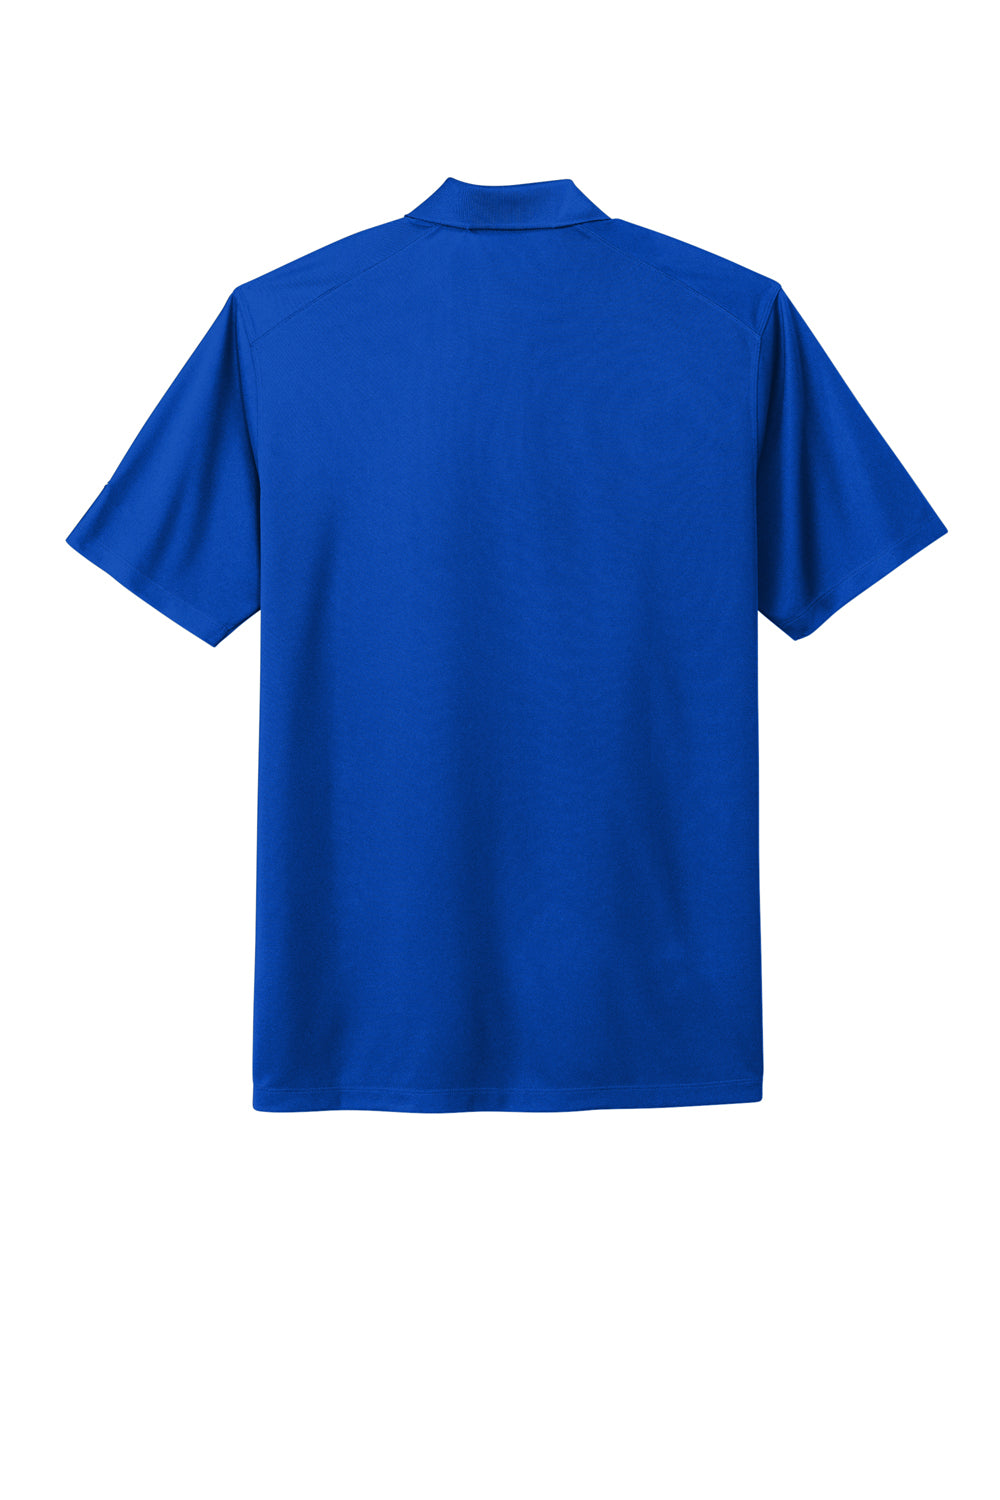 Nike NKDC1963 Mens Dri-Fit Moisture Wicking Micro Pique 2.0 Short Sleeve Polo Shirt Game Royal Blue Flat Back